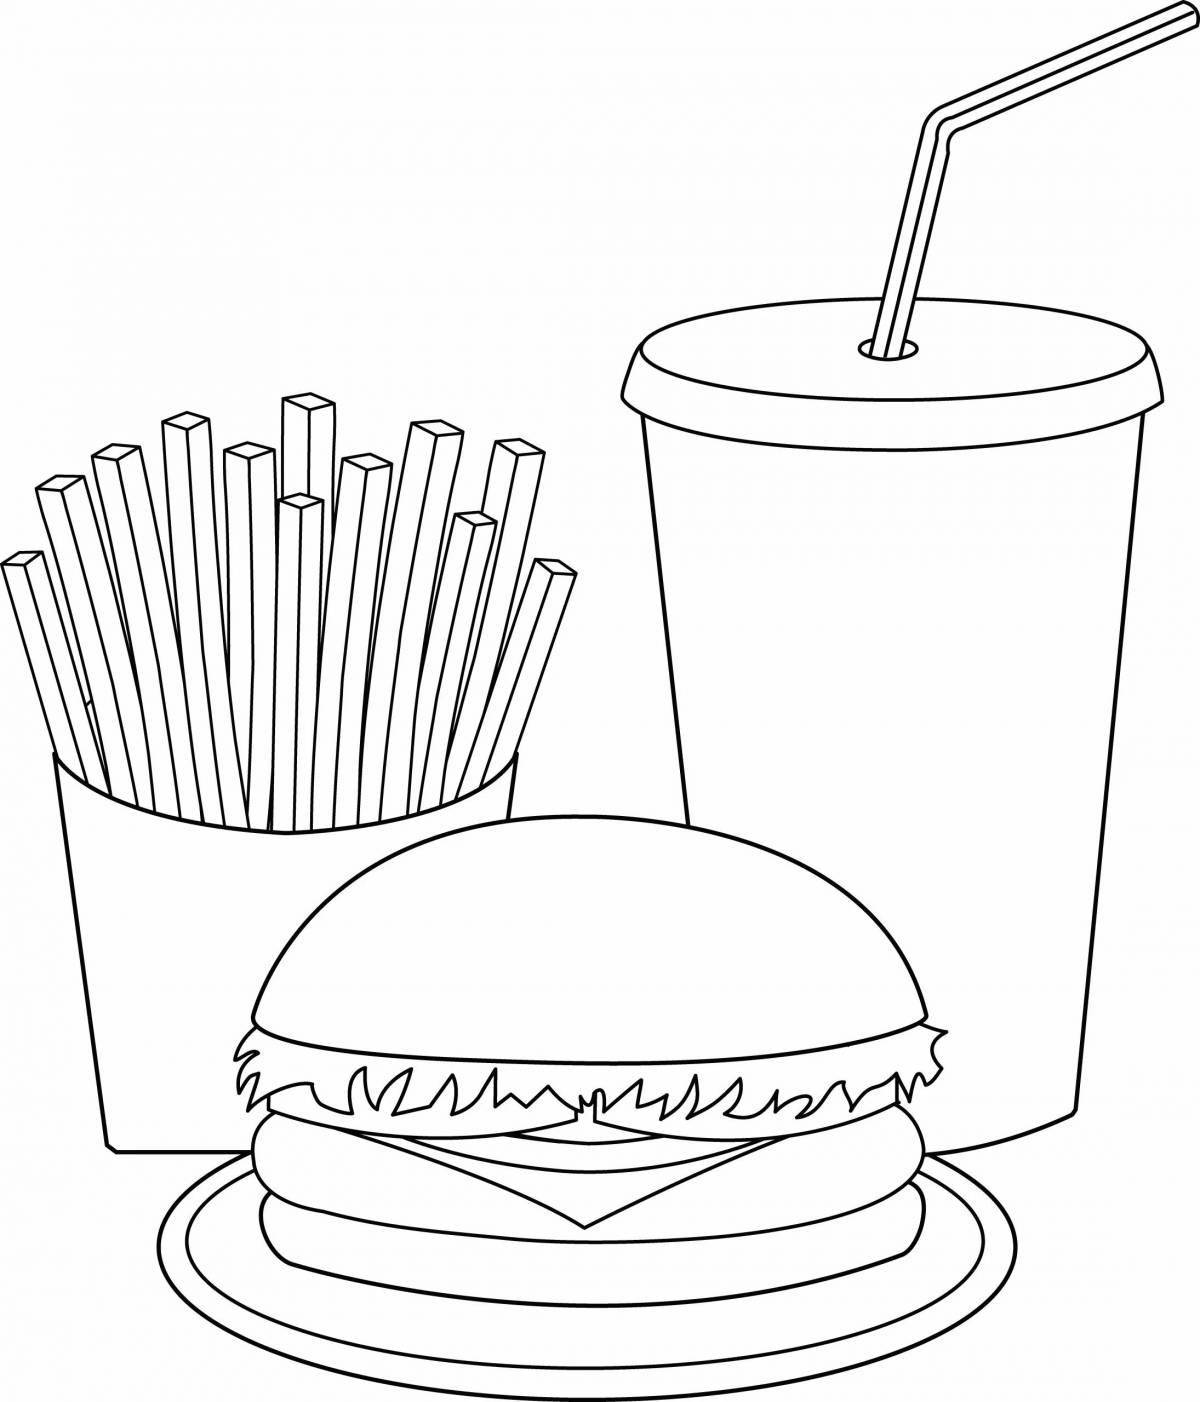 Coloring page adorable cheeseburger